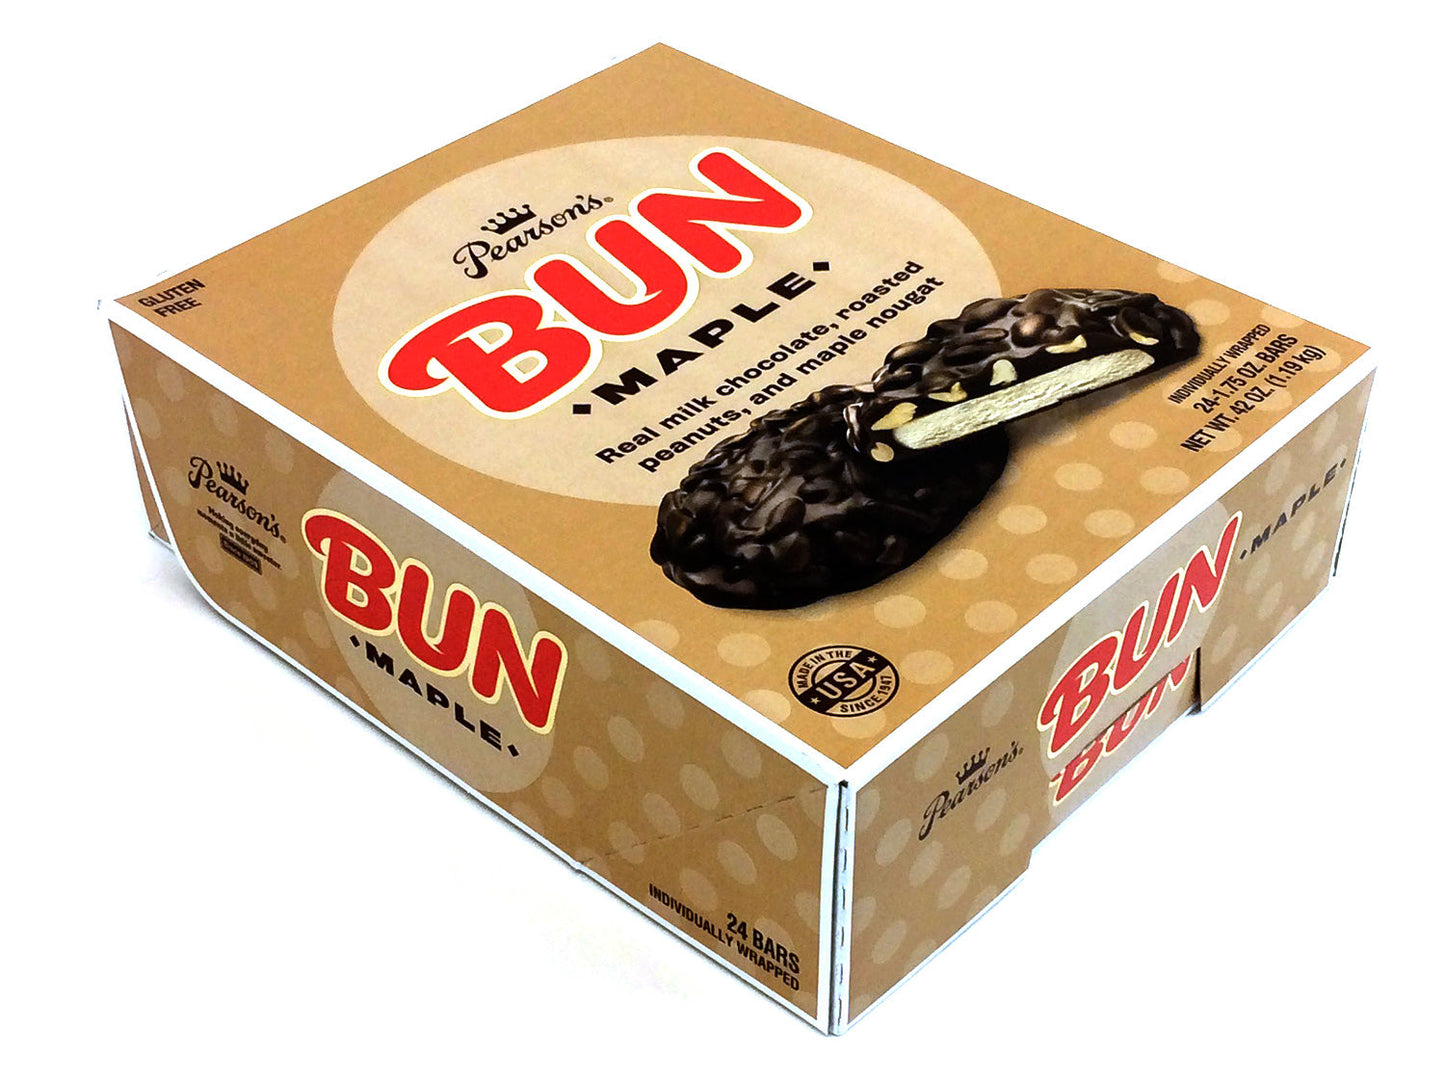 Bun - maple - 1.75 oz bar - box of 24